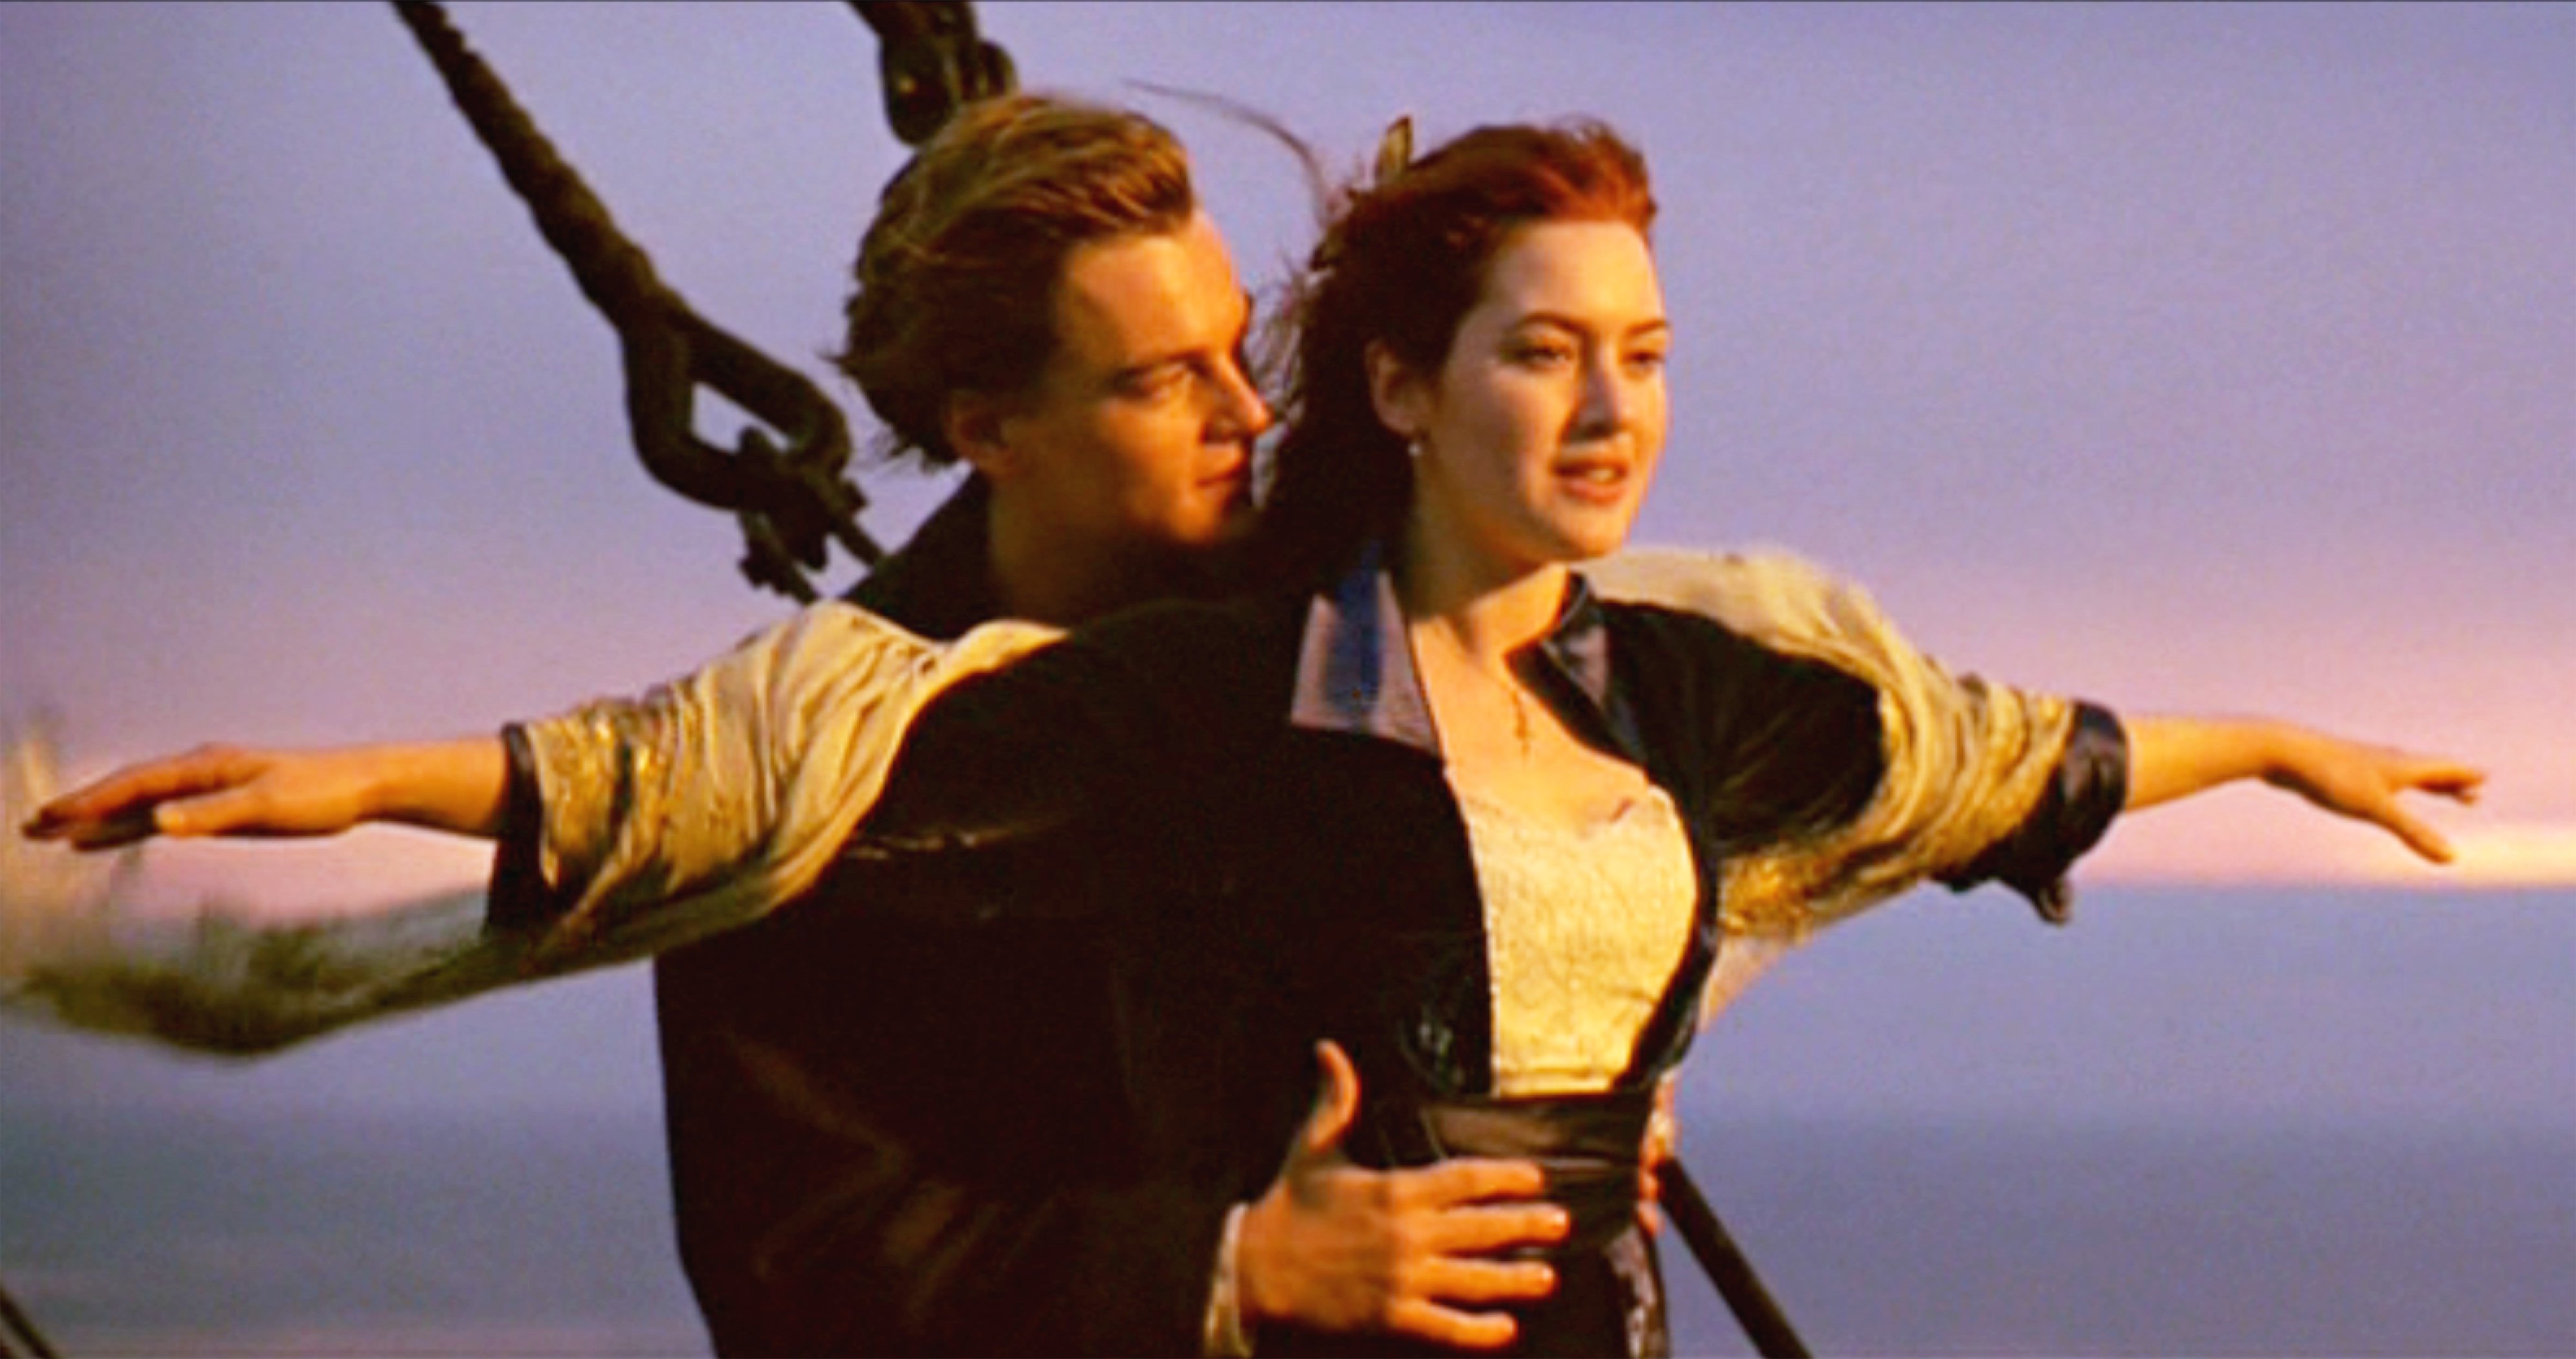 Kate Winslet als Rose und Leonardo DiCaprio als Jack im Film "Titanic" am 19. Dezember 1997 in Los Angeles, Kalifornien ┃Quelle: Getty Images